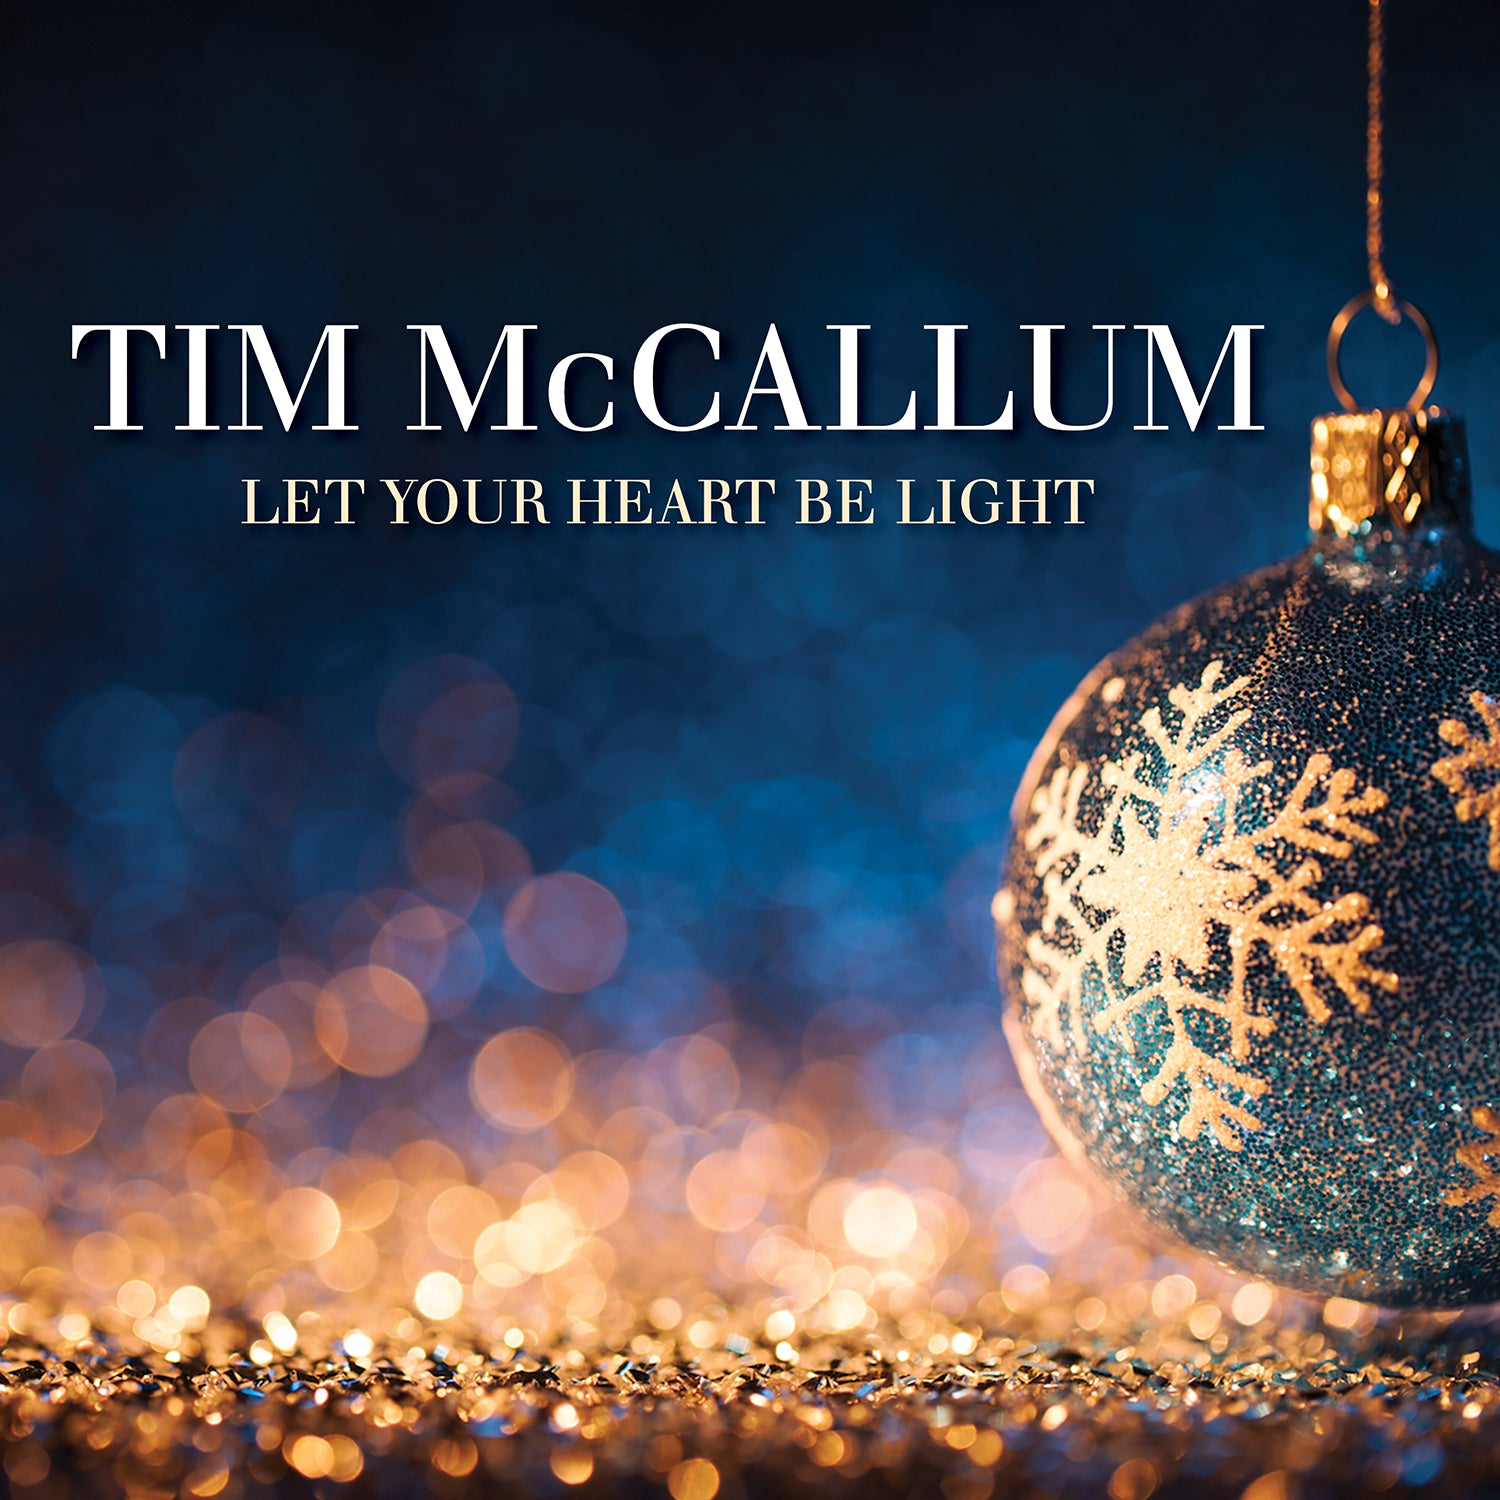 TIM MCCALLUM - LET YOUR HEART BE LIGHT